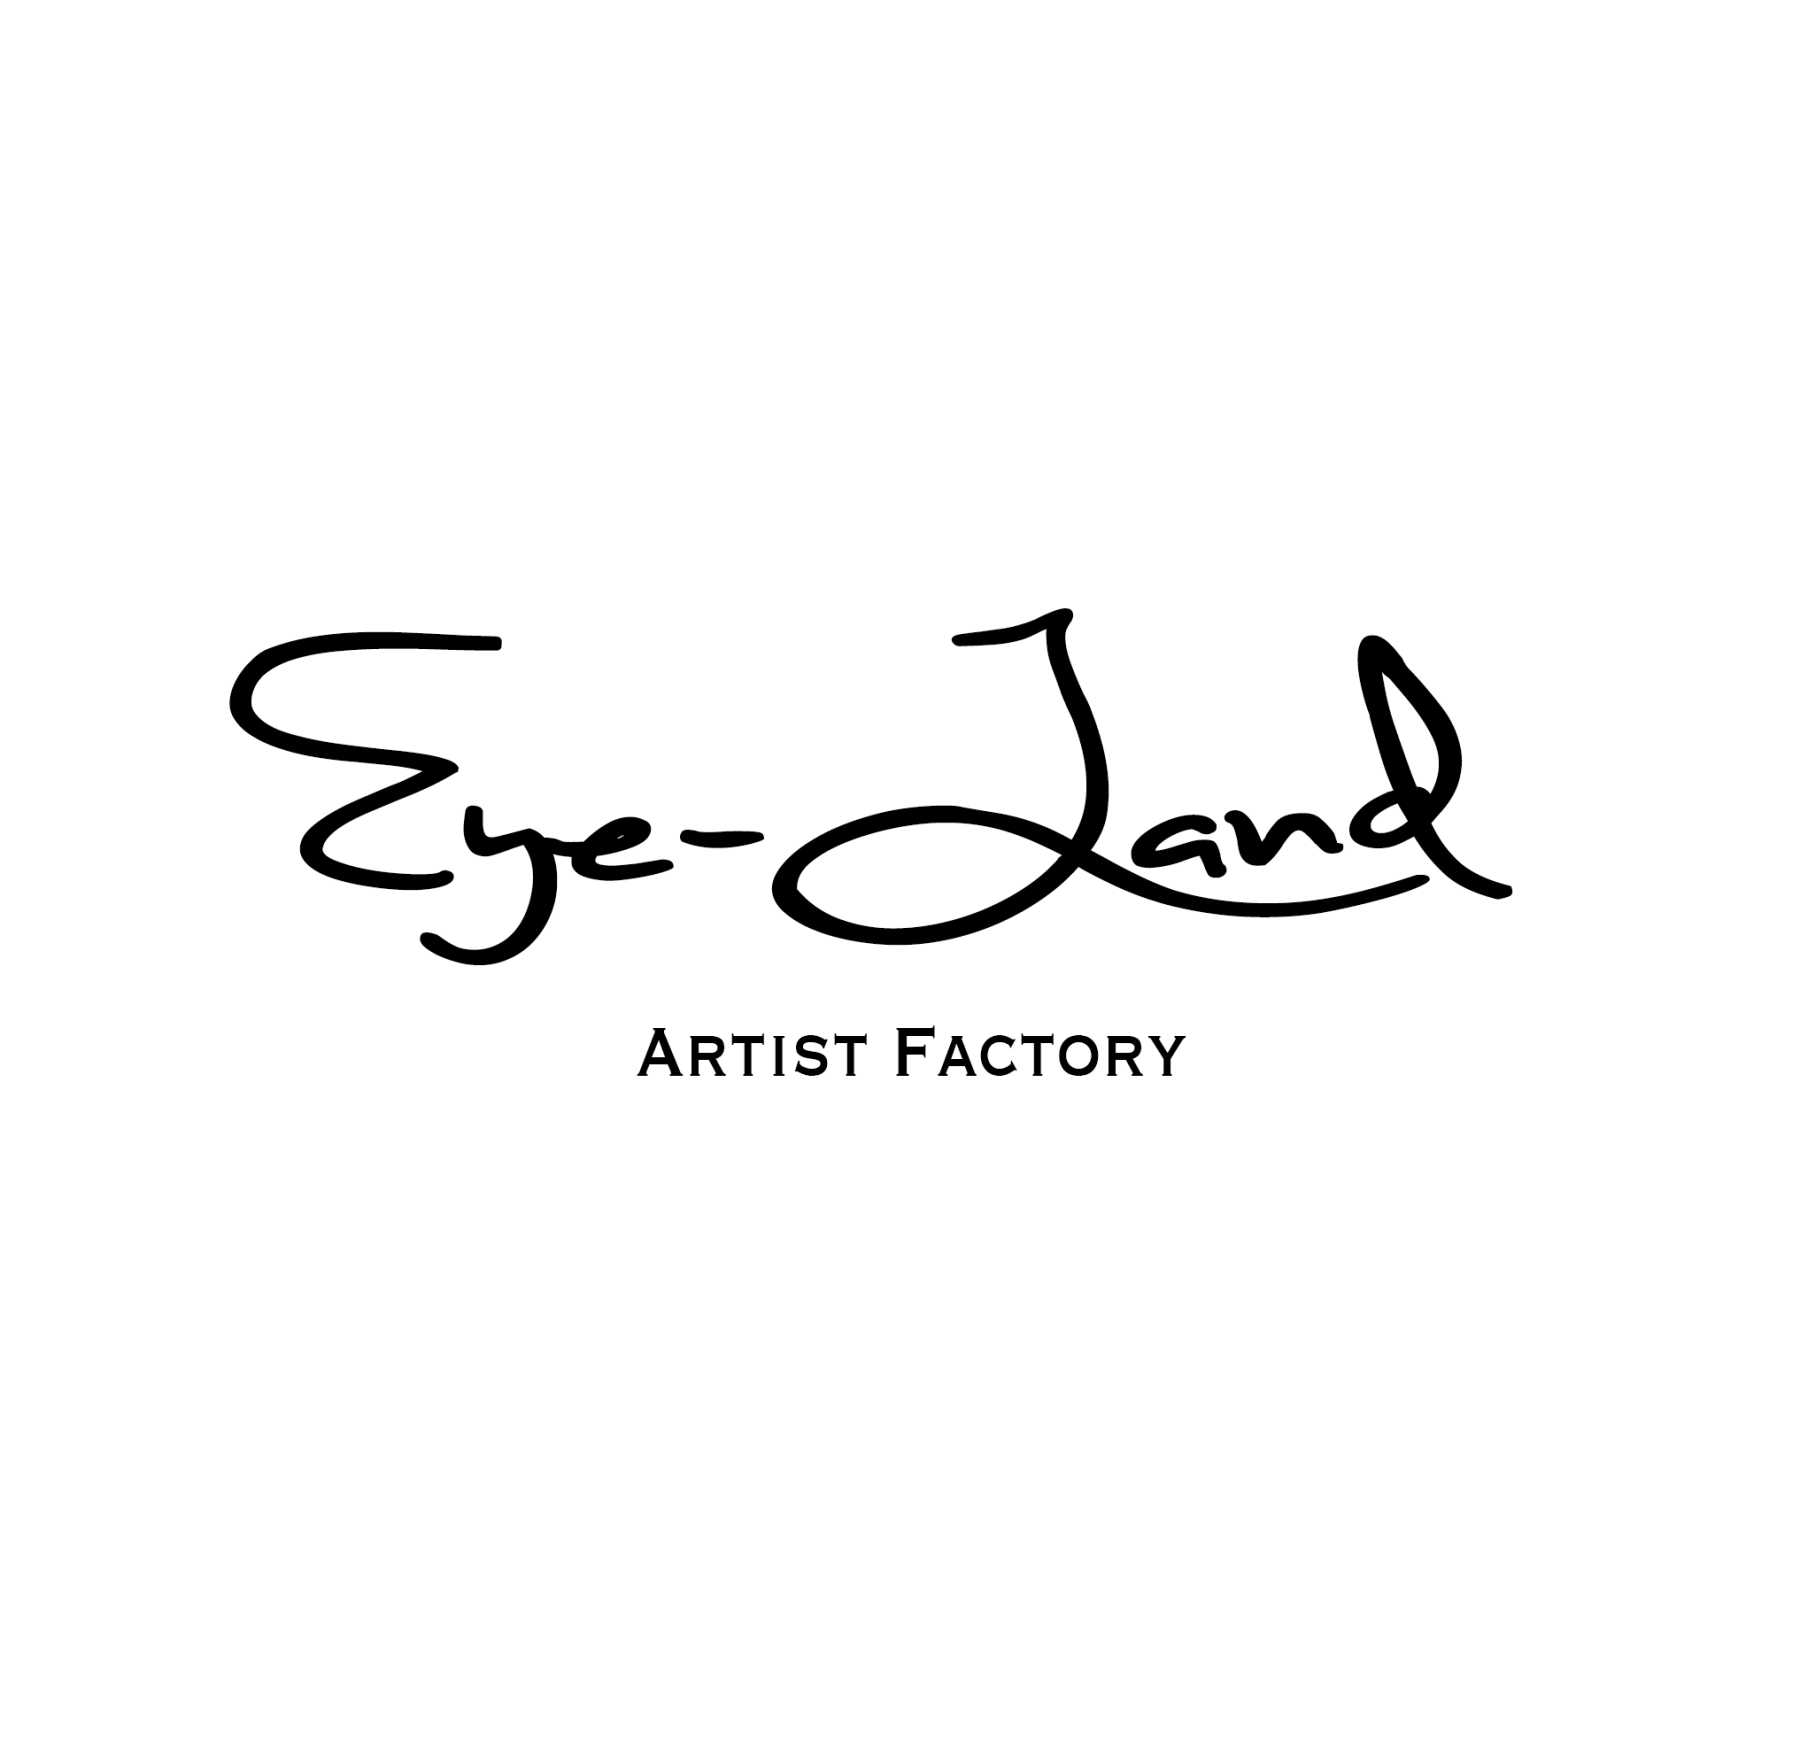  Eye-Land ARTIST FACTRY